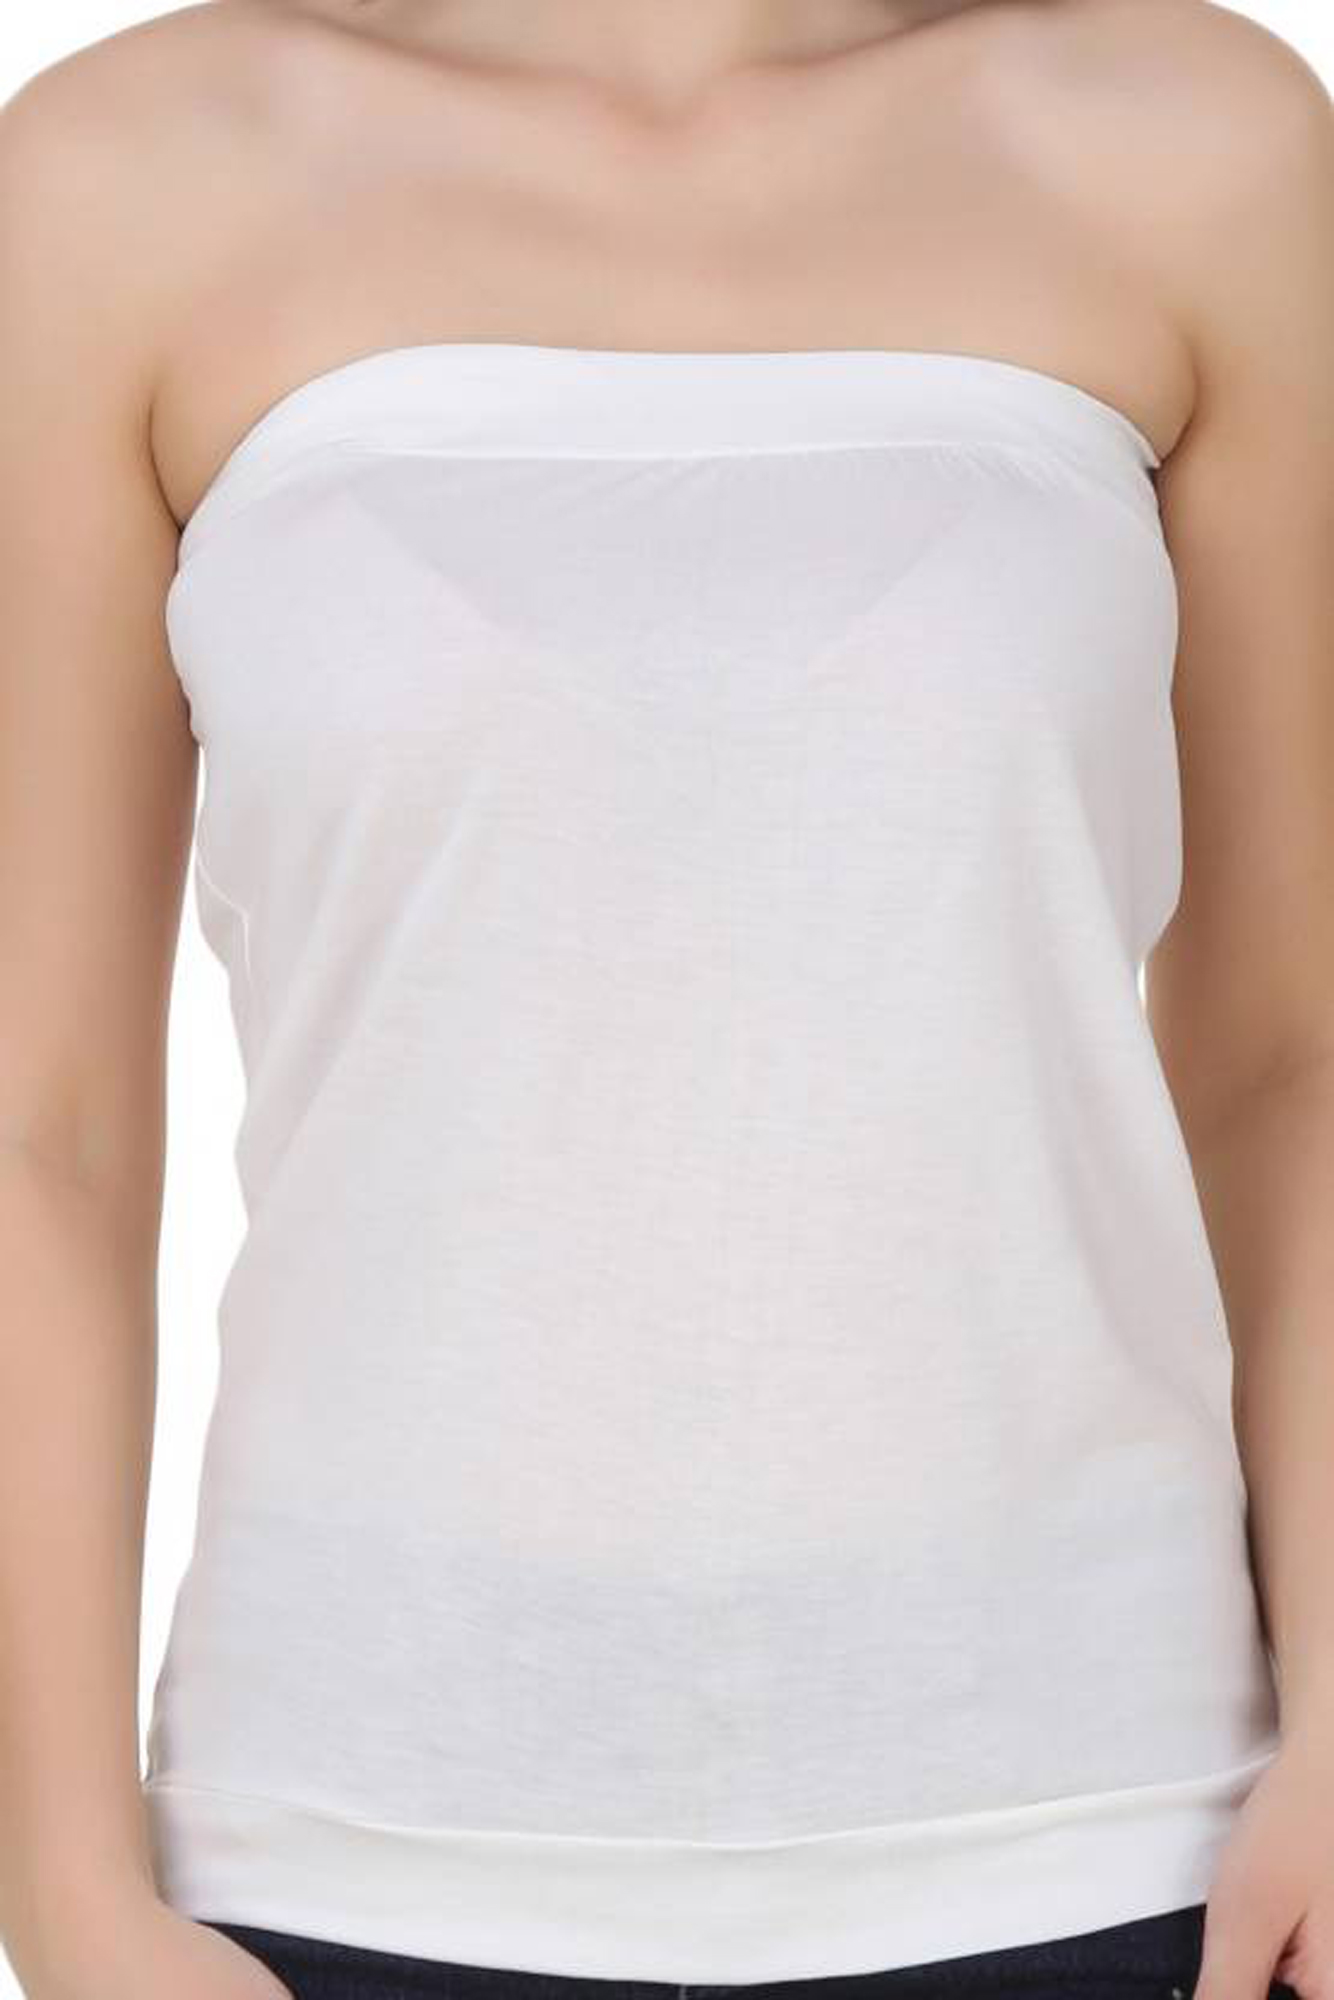 Buy Spero Tops High Quality Fashion Women Seamless White Underwear Tops Slim Strapless Tube Top 